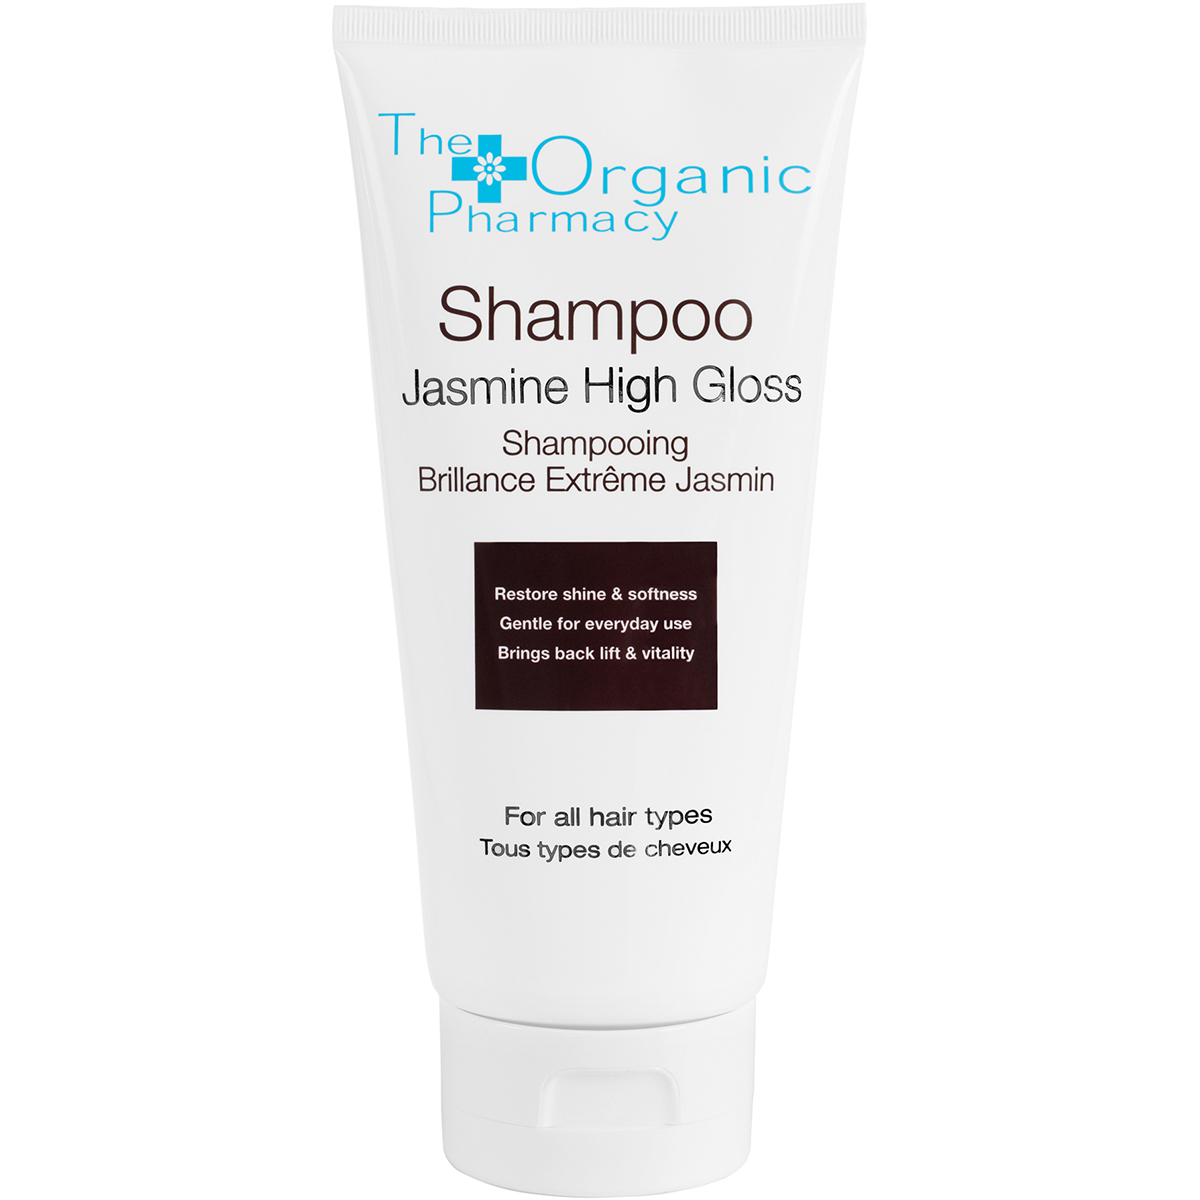 The Organic Pharmacy Jasmine High Gloss Shampoo